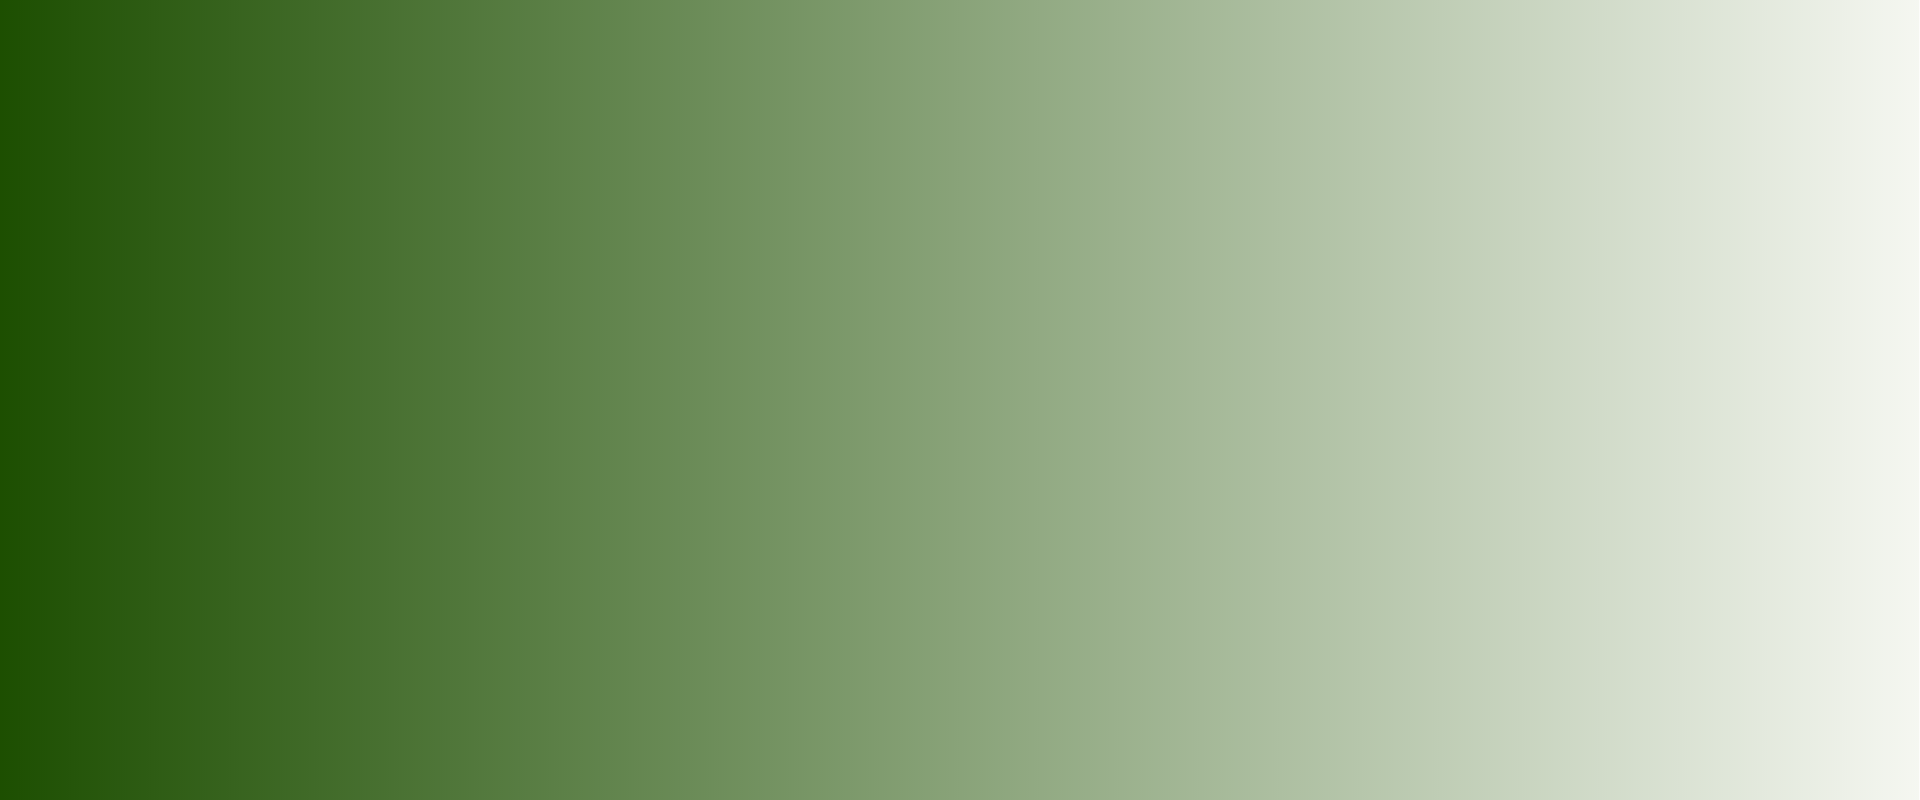 Green shaded header image